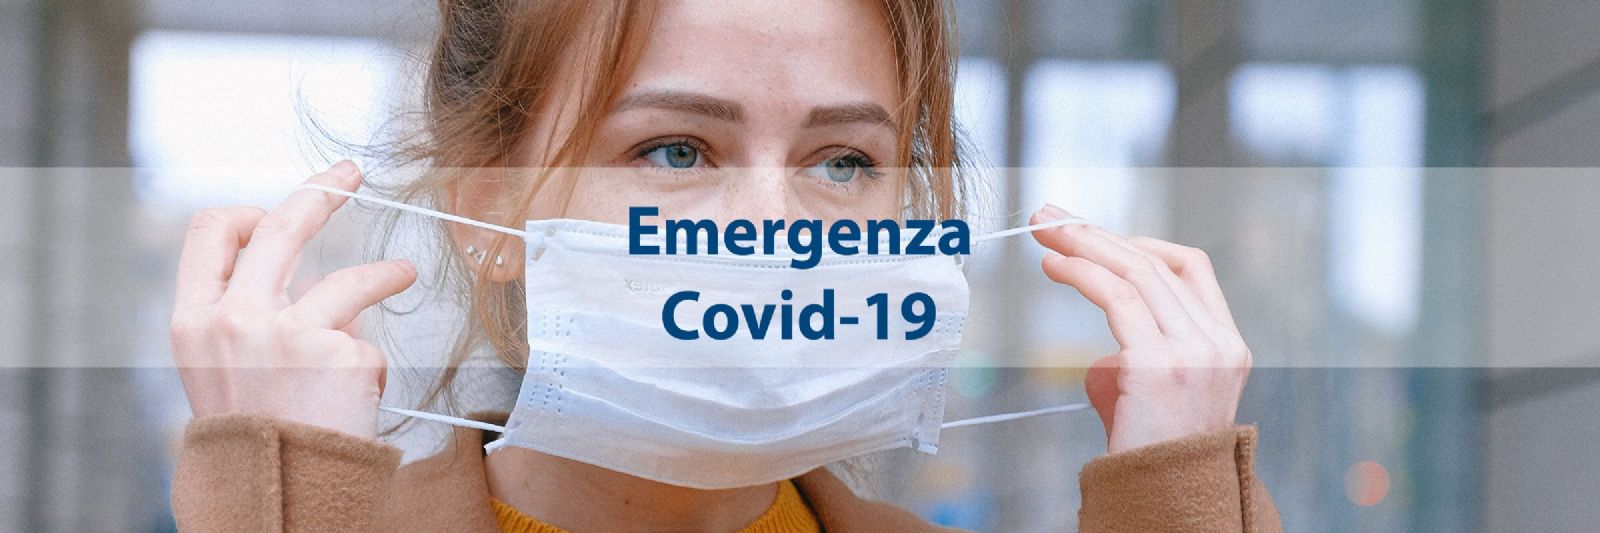 Emergenza Covid 19